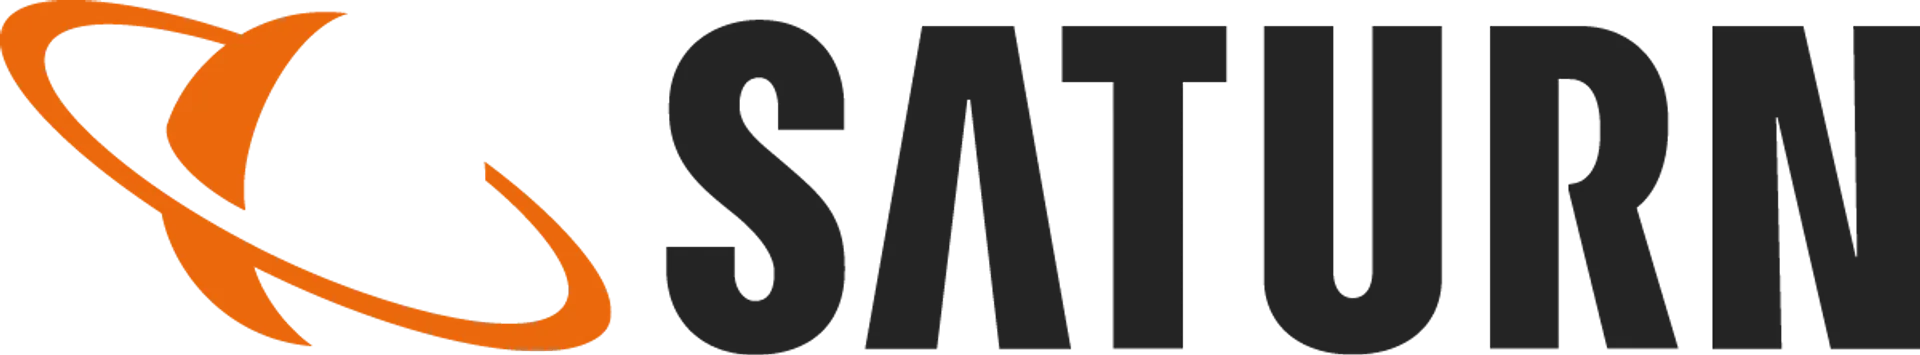 SATURN logo